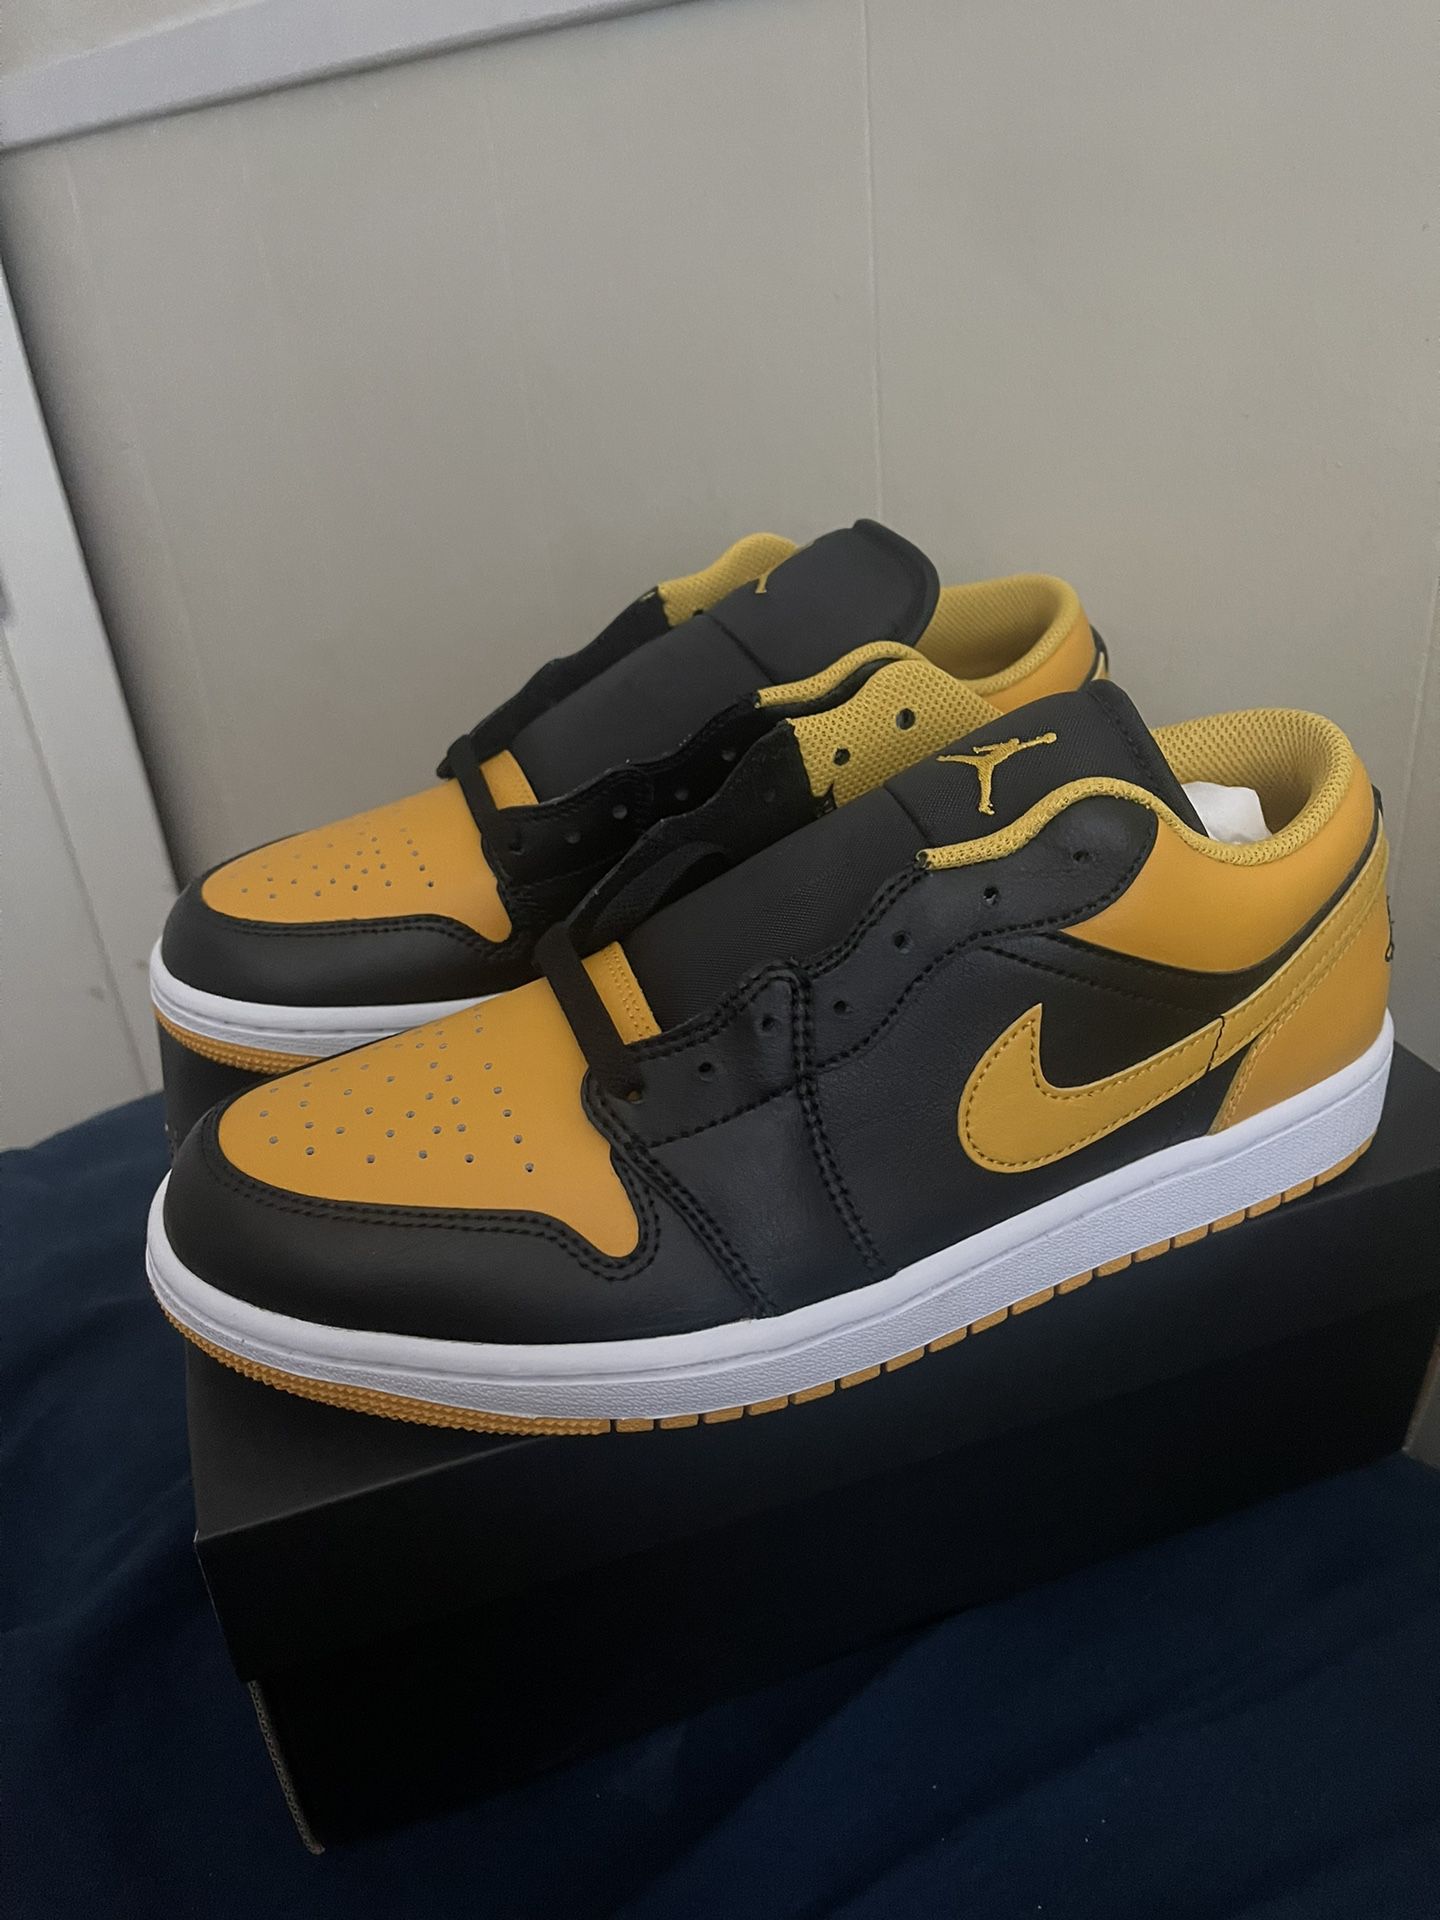 DS Air Jordan 1 Low Black And Yellow Size 9.5 Men’s